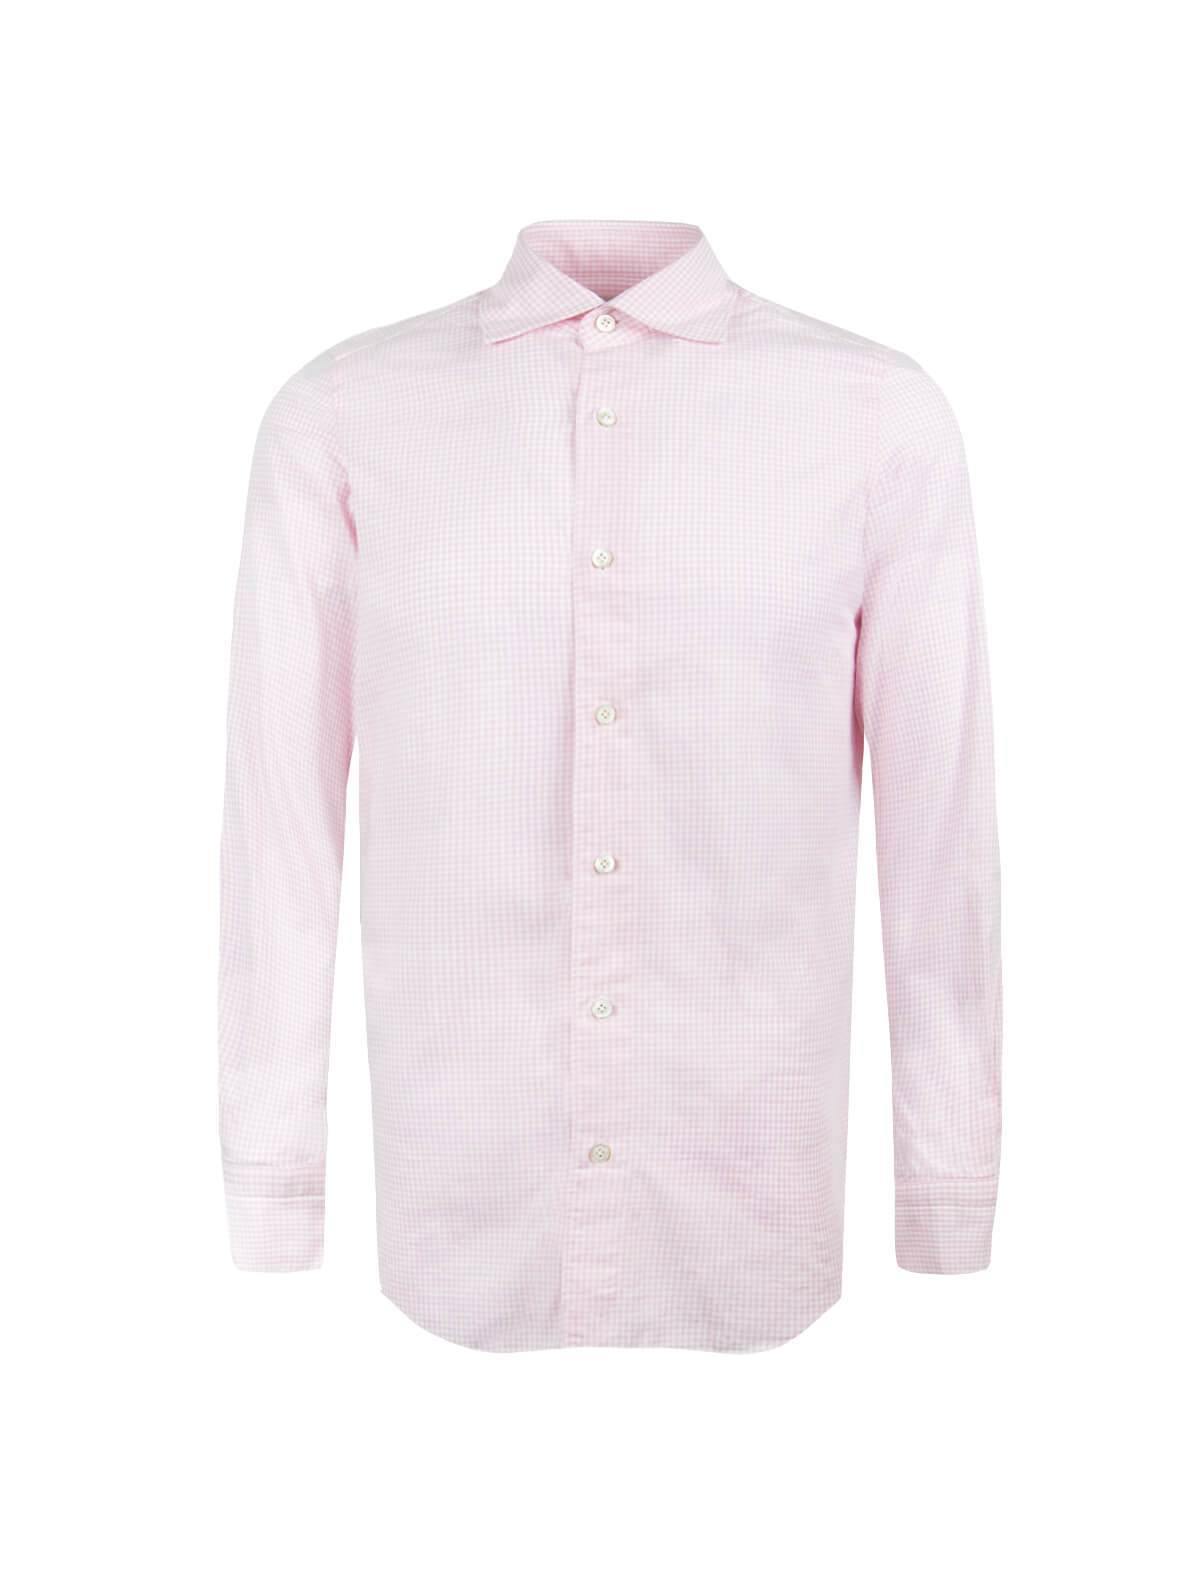 FINAMORE 1925 Tokyo Cotton Chambray Shirt in Light Pink Checks | CLOSET Singapore